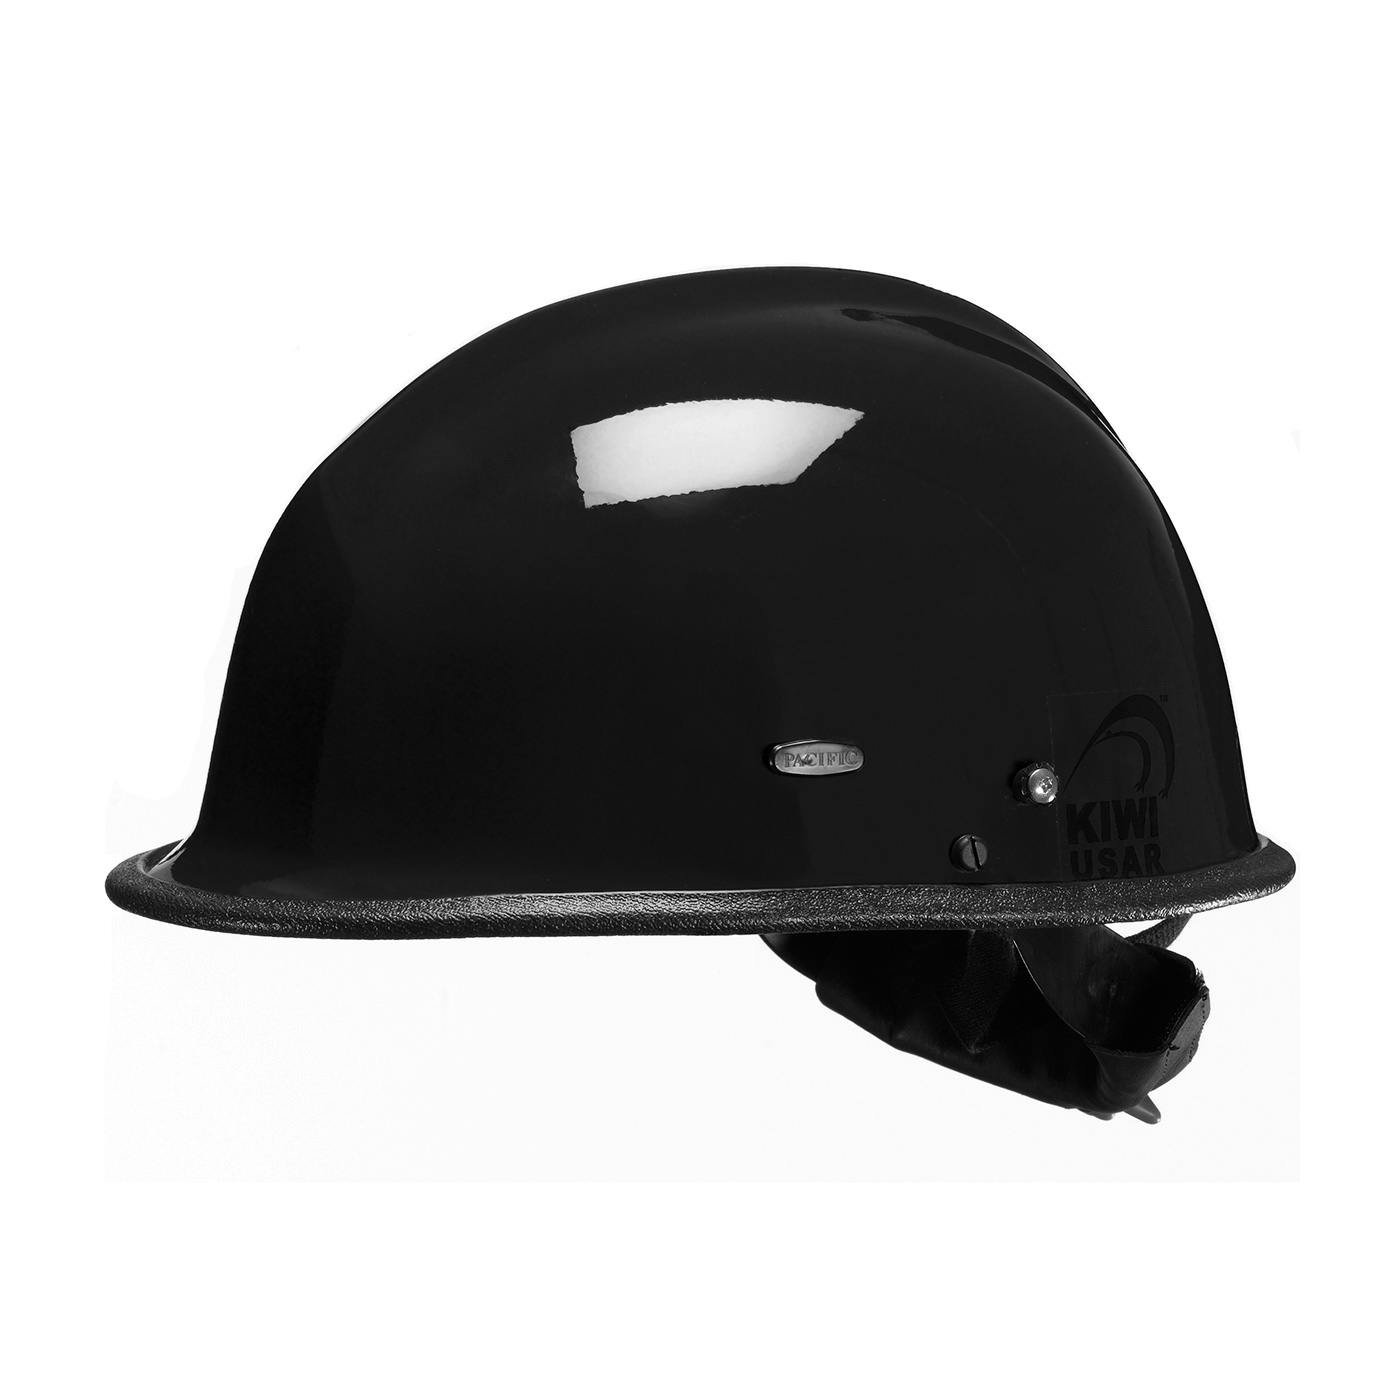 R3 KIWI USAR™ Rescue Helmet with ESS Goggle Mounts (804-341X)_0